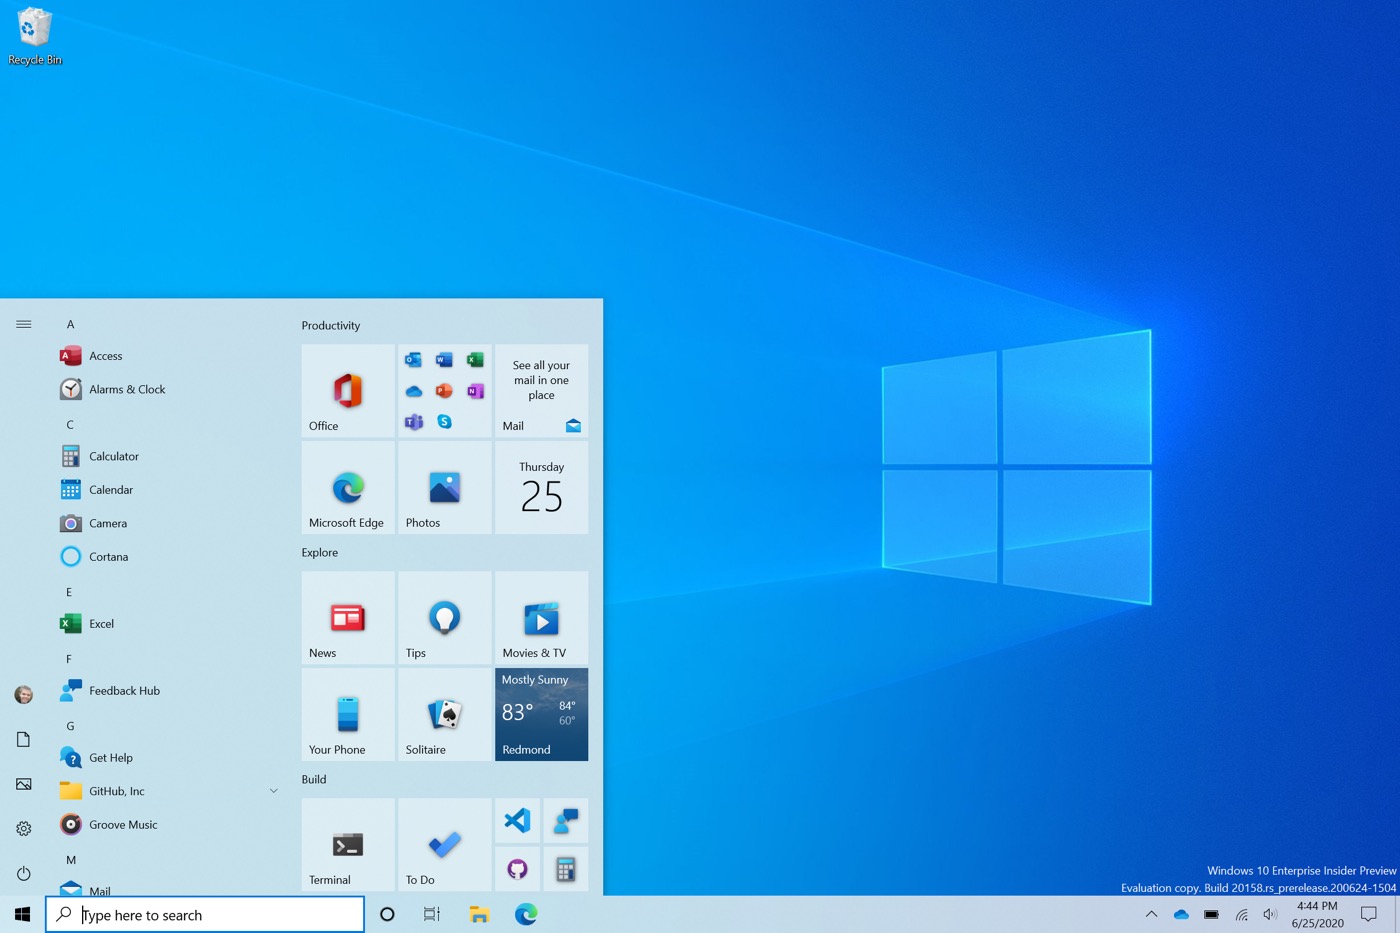 Windows 10: Microsoft will fix the error with USB printers